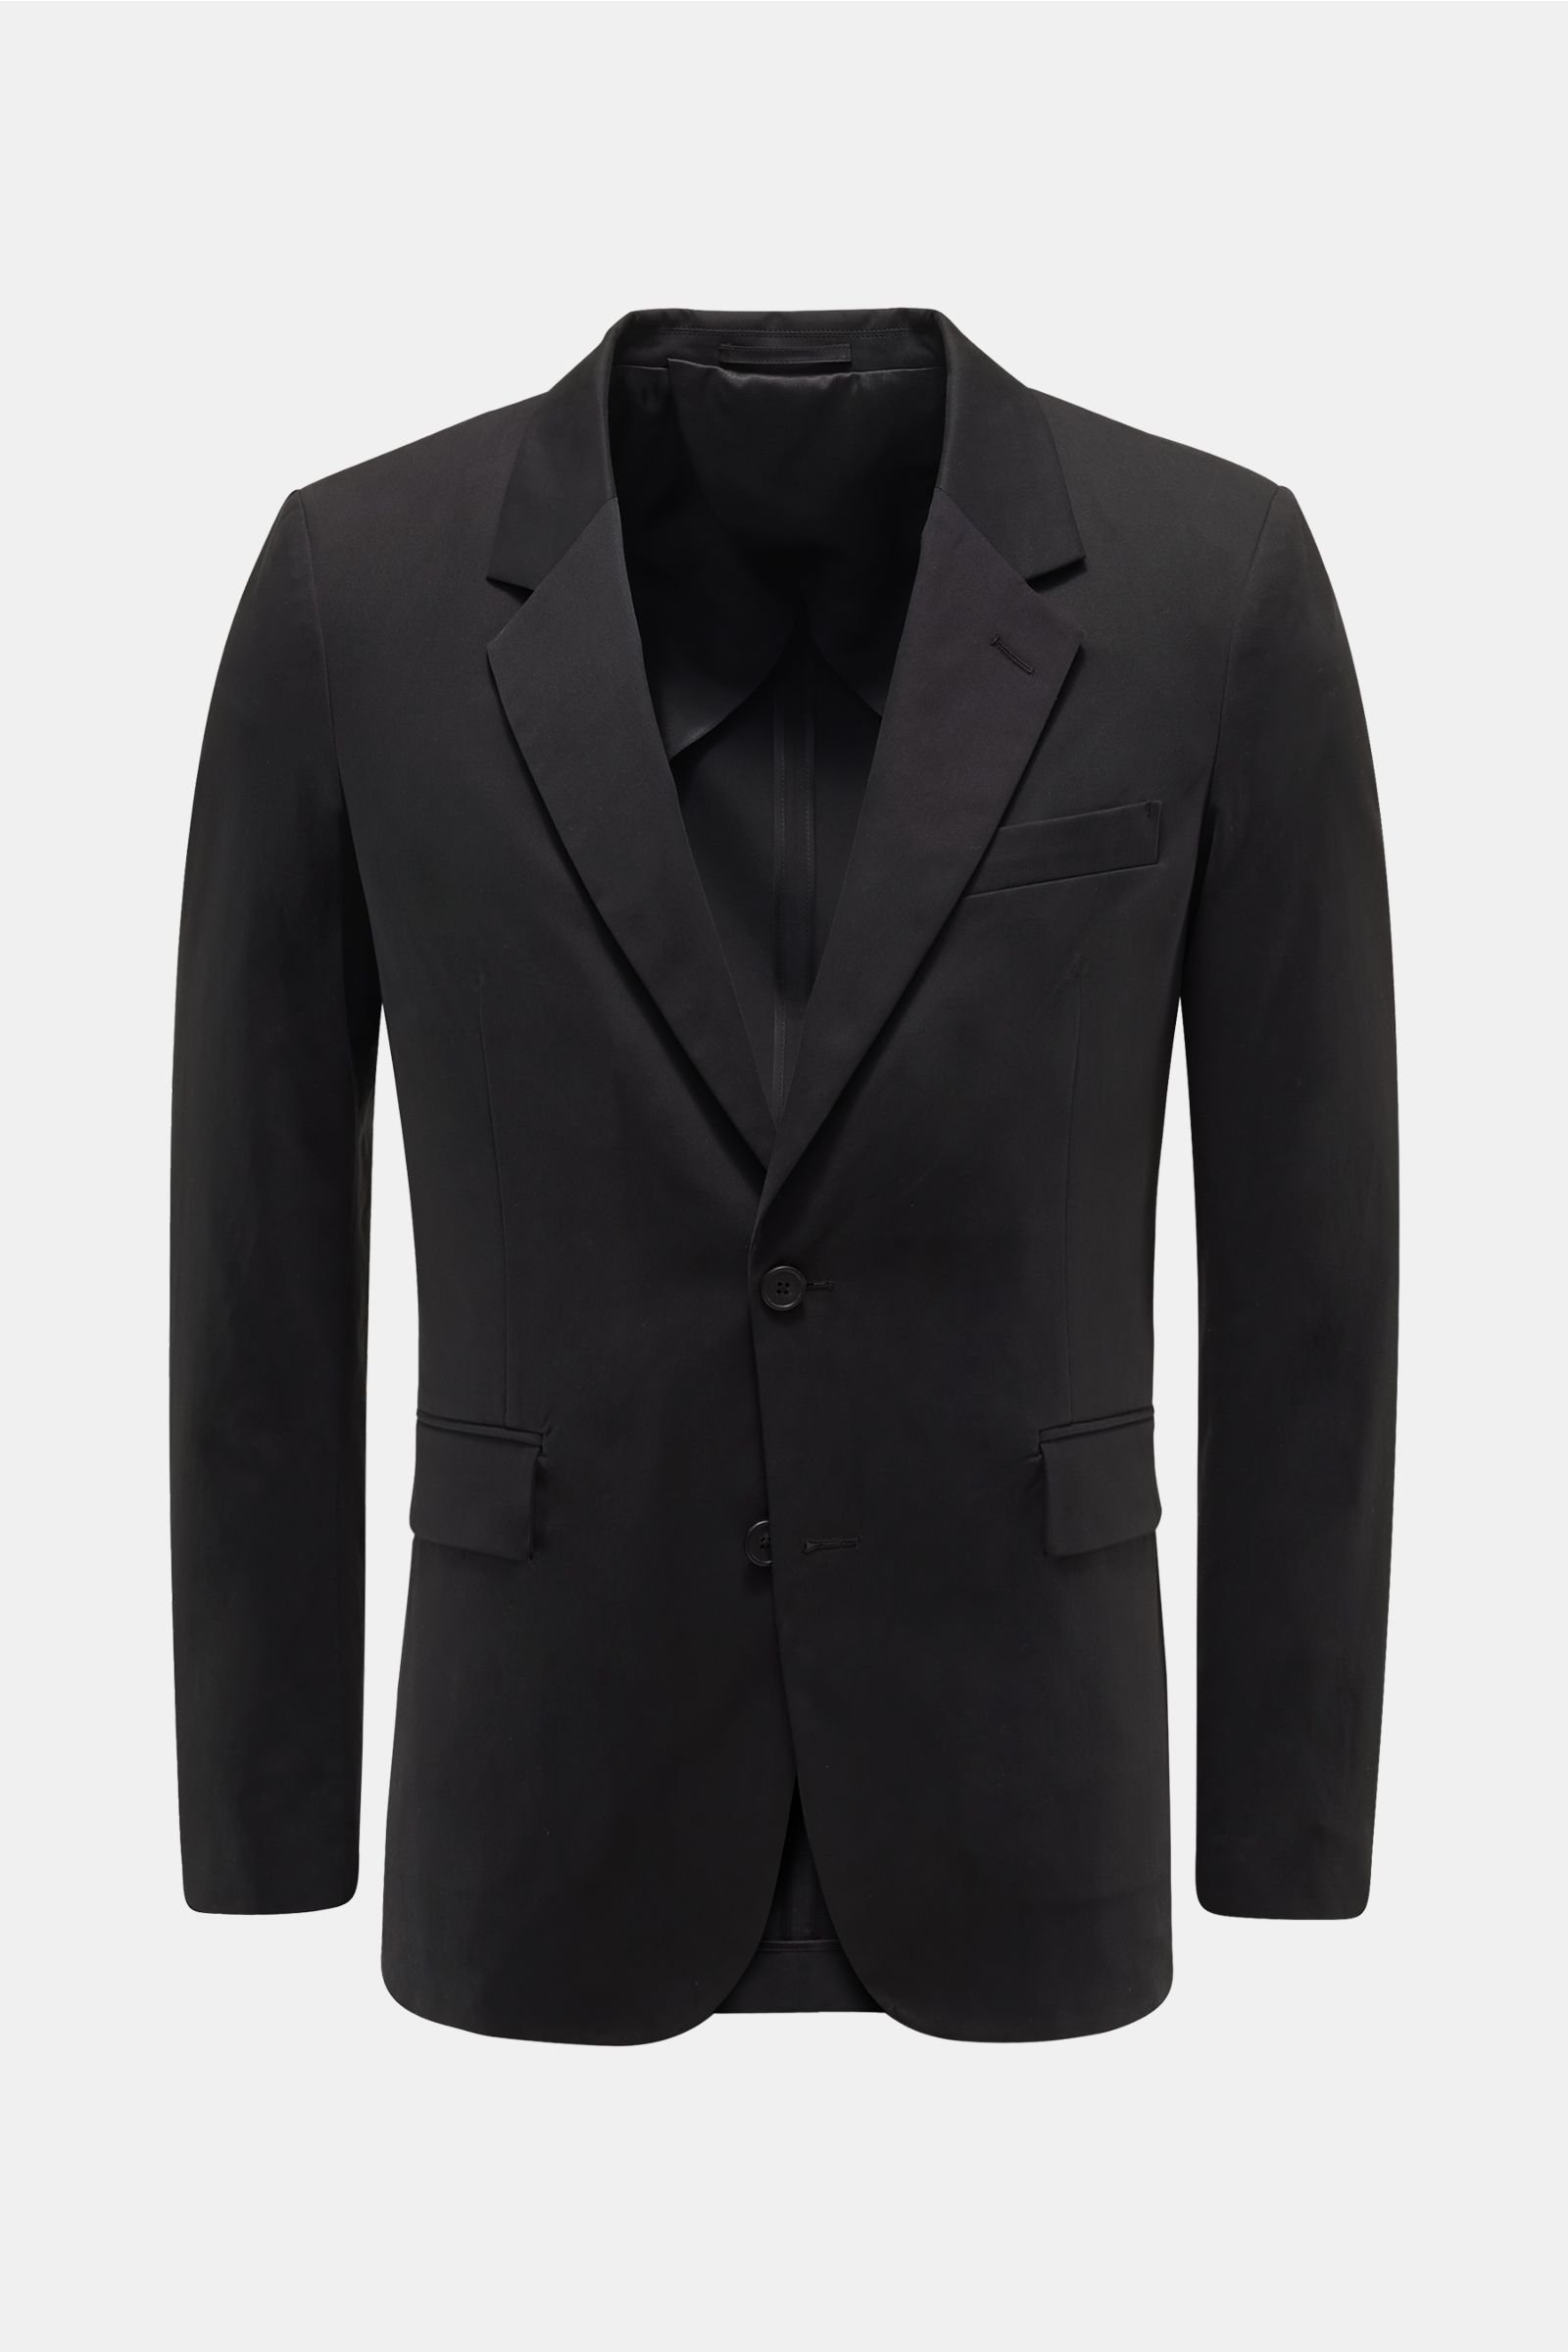 Smart-casual jacket 'Slater' black